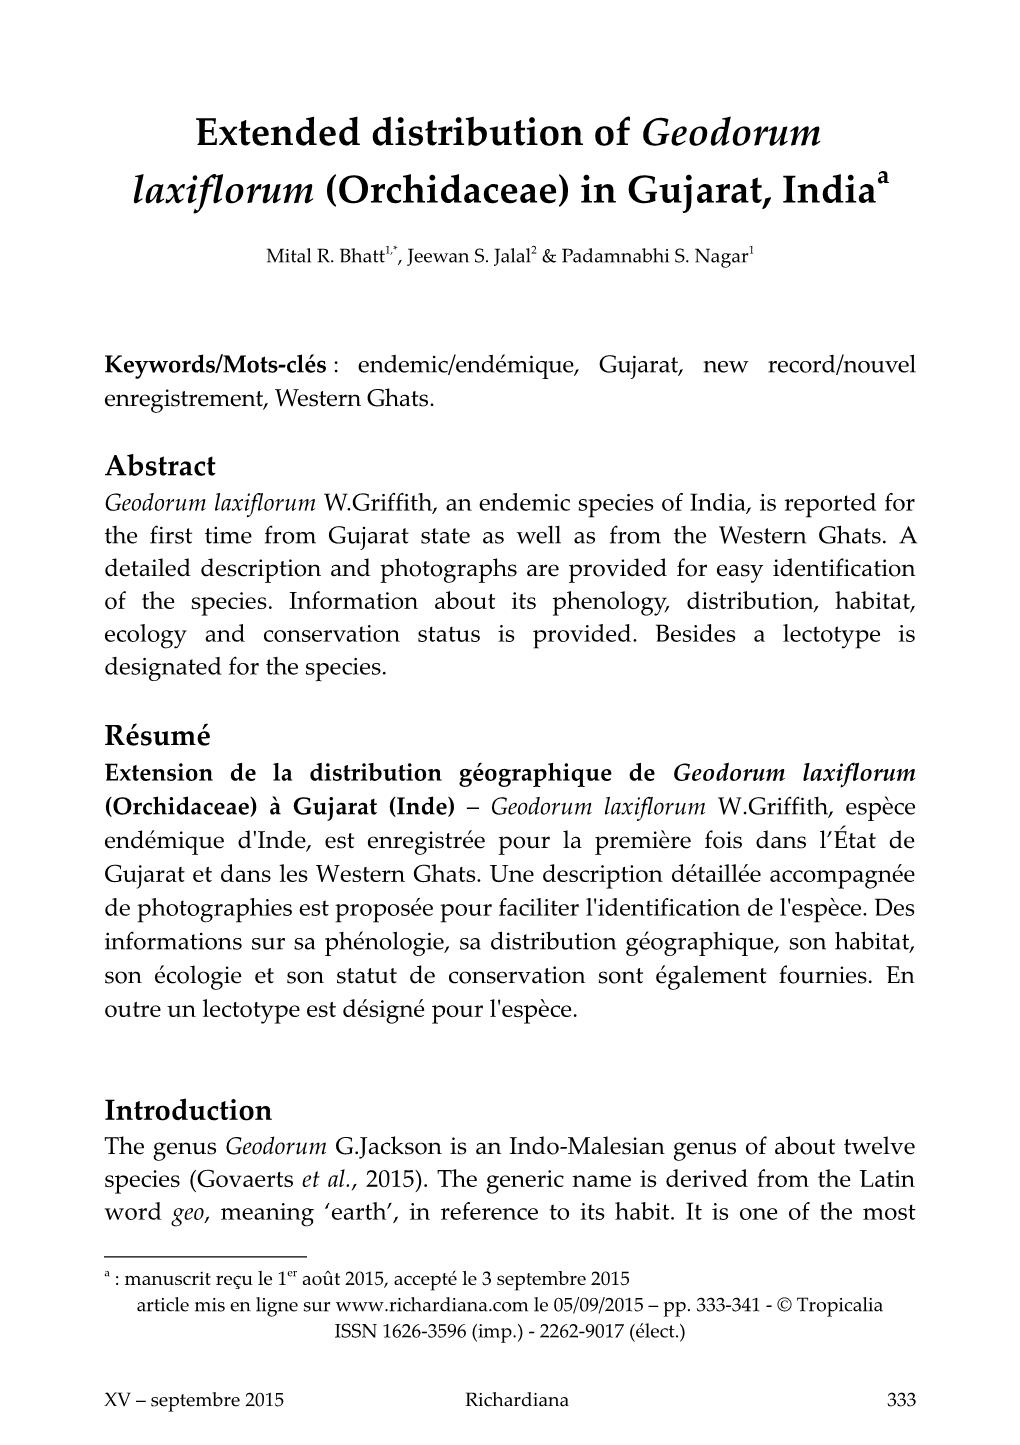 Extended Distribution of Geodorum Laxiflorum (Orchidaceae) in Gujarat, Indiaa